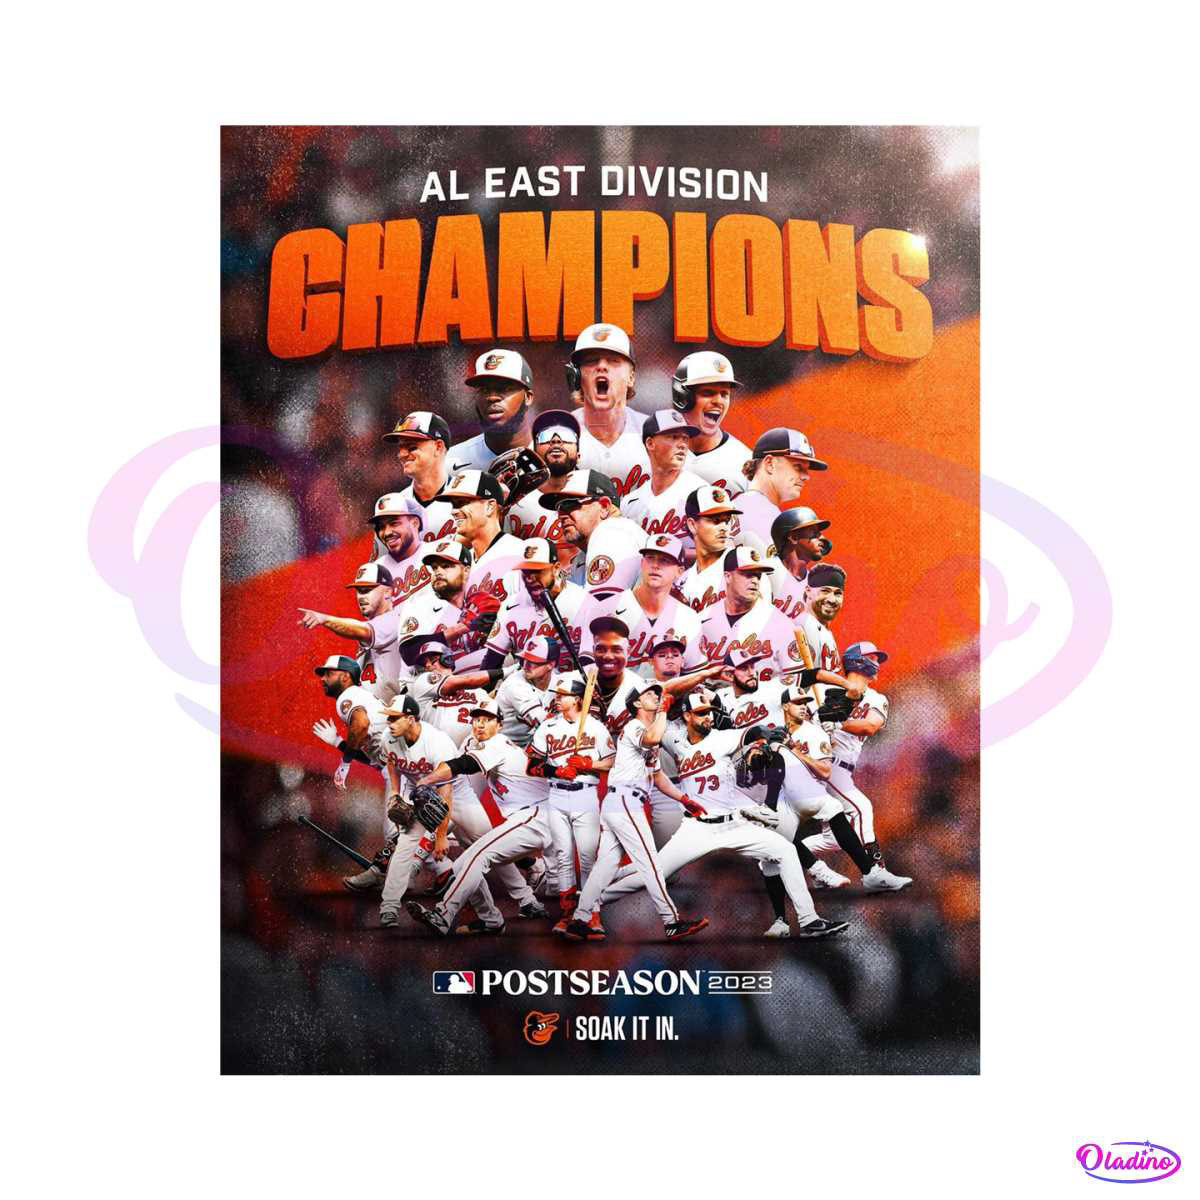 design Digital Art  digital mlb baseball Baltimore Orioles sports Champions AL East Division